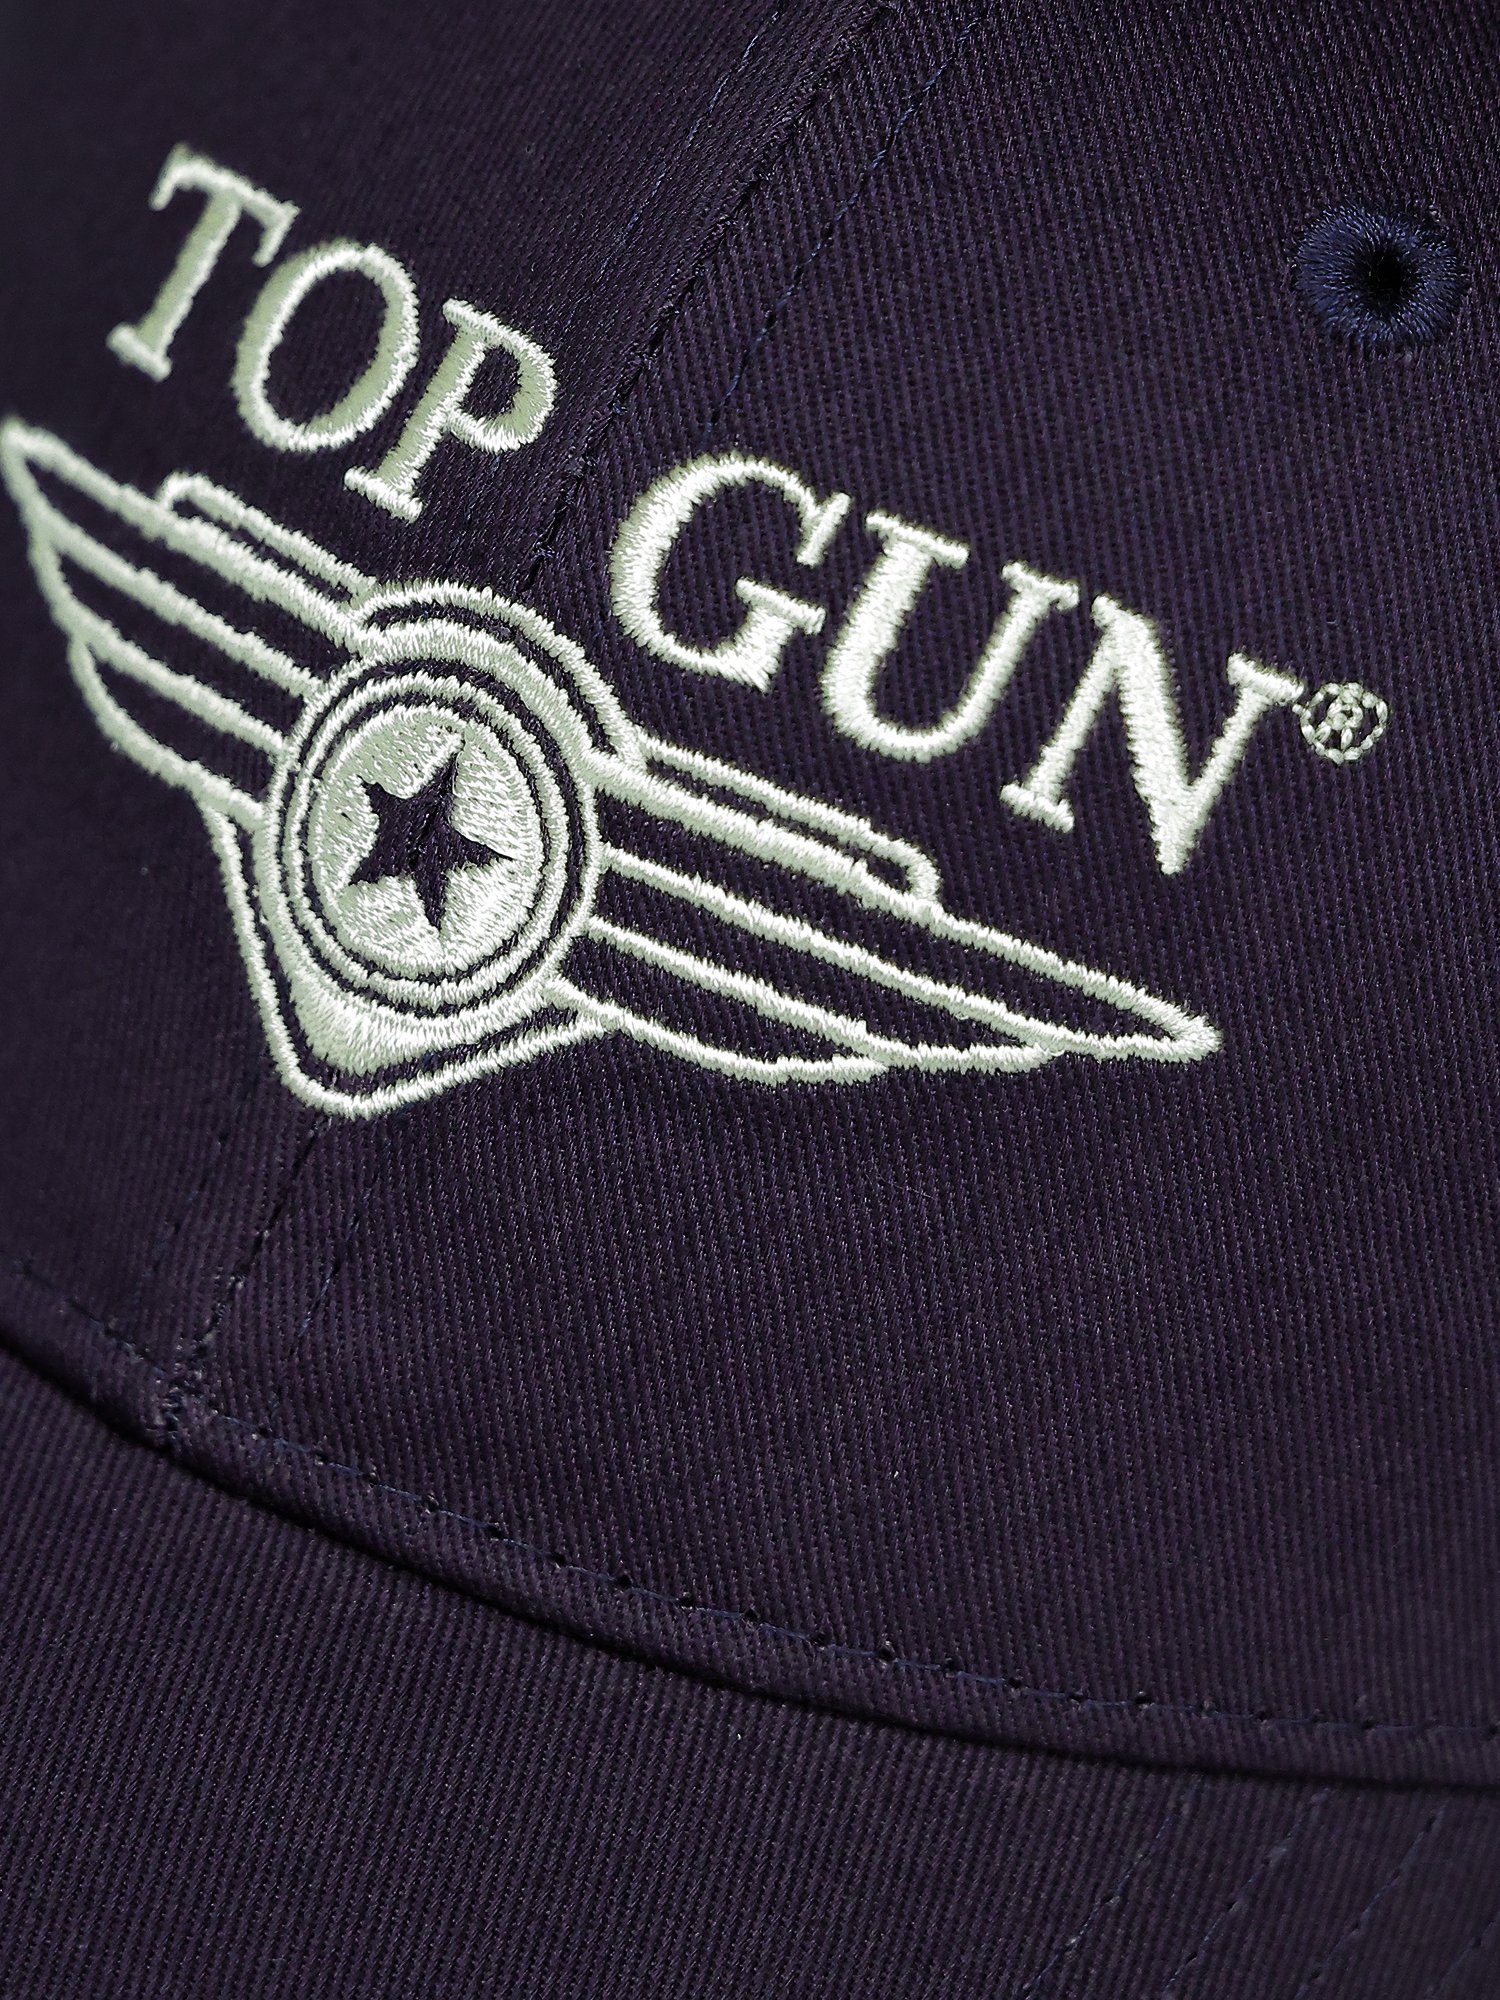 Snapback GUN navy Cap TOP TG22013